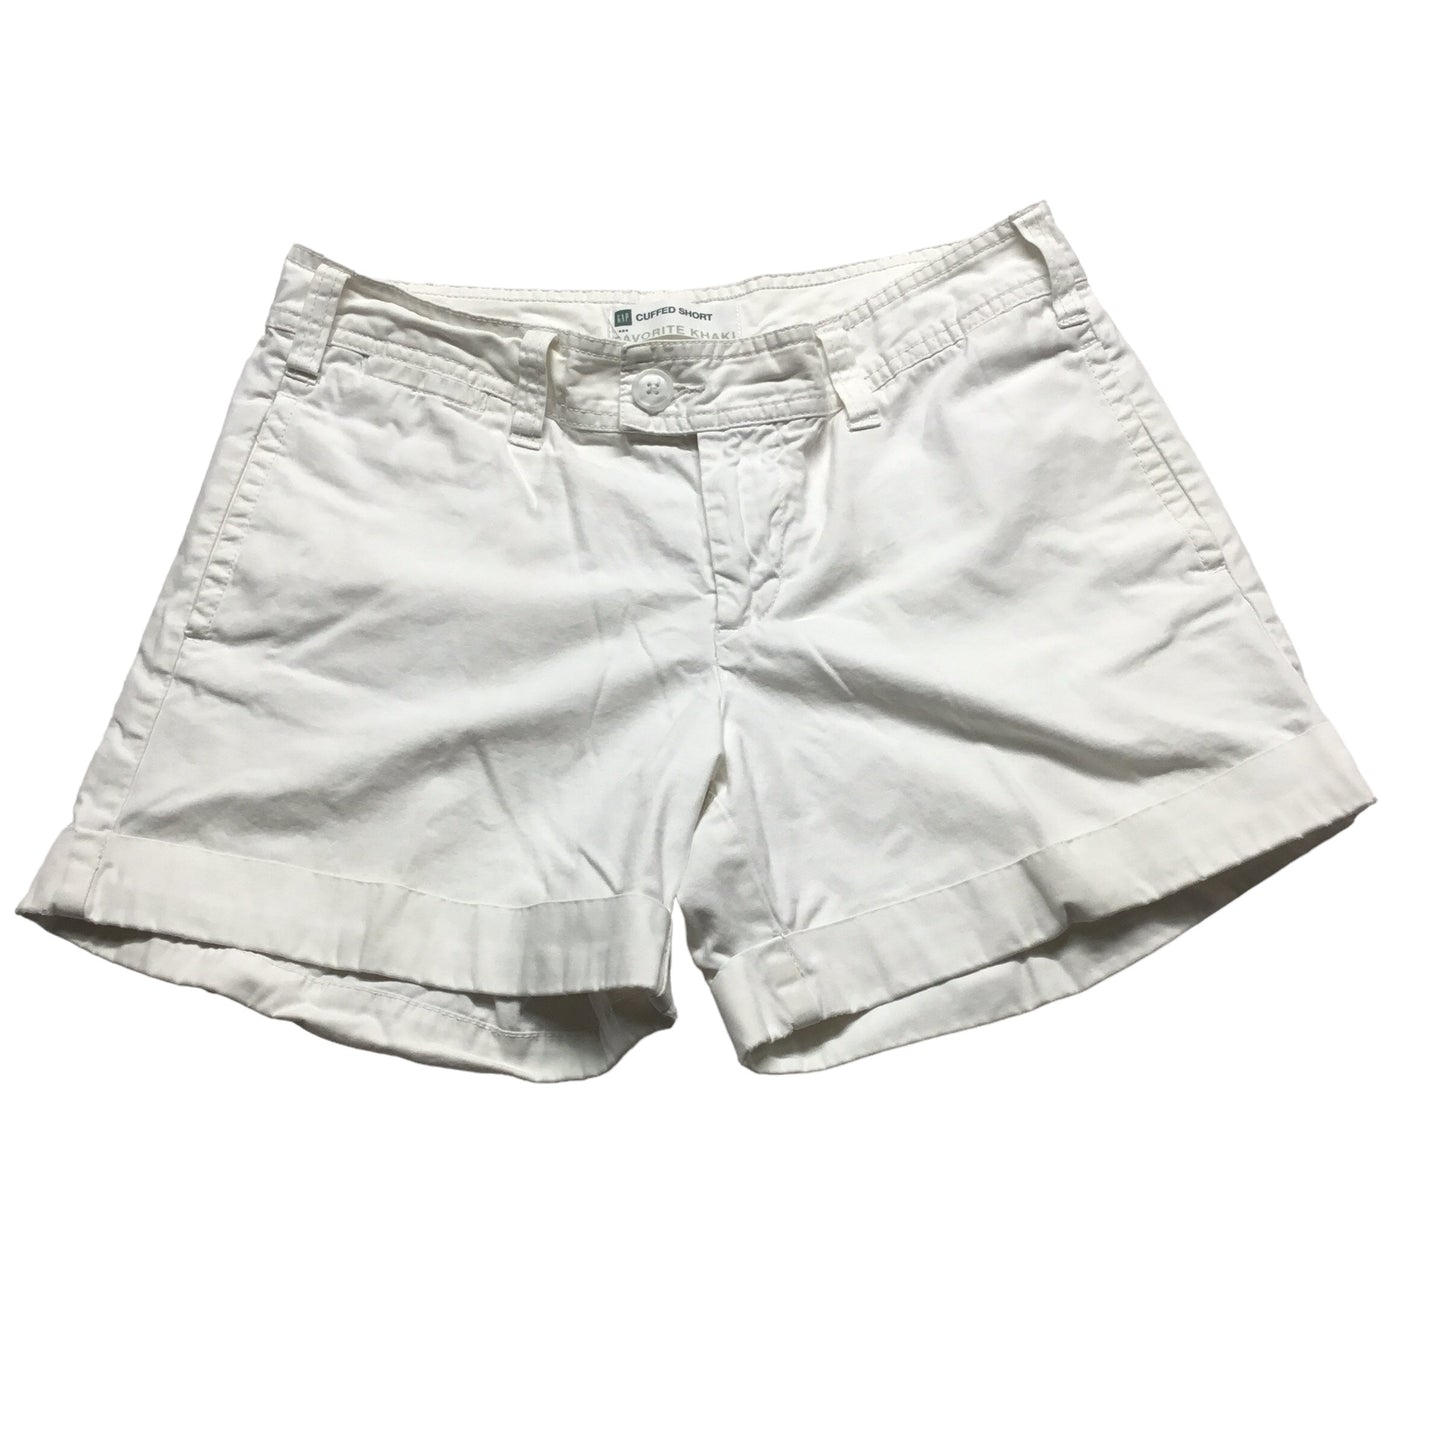 White Shorts Gap, Size 10